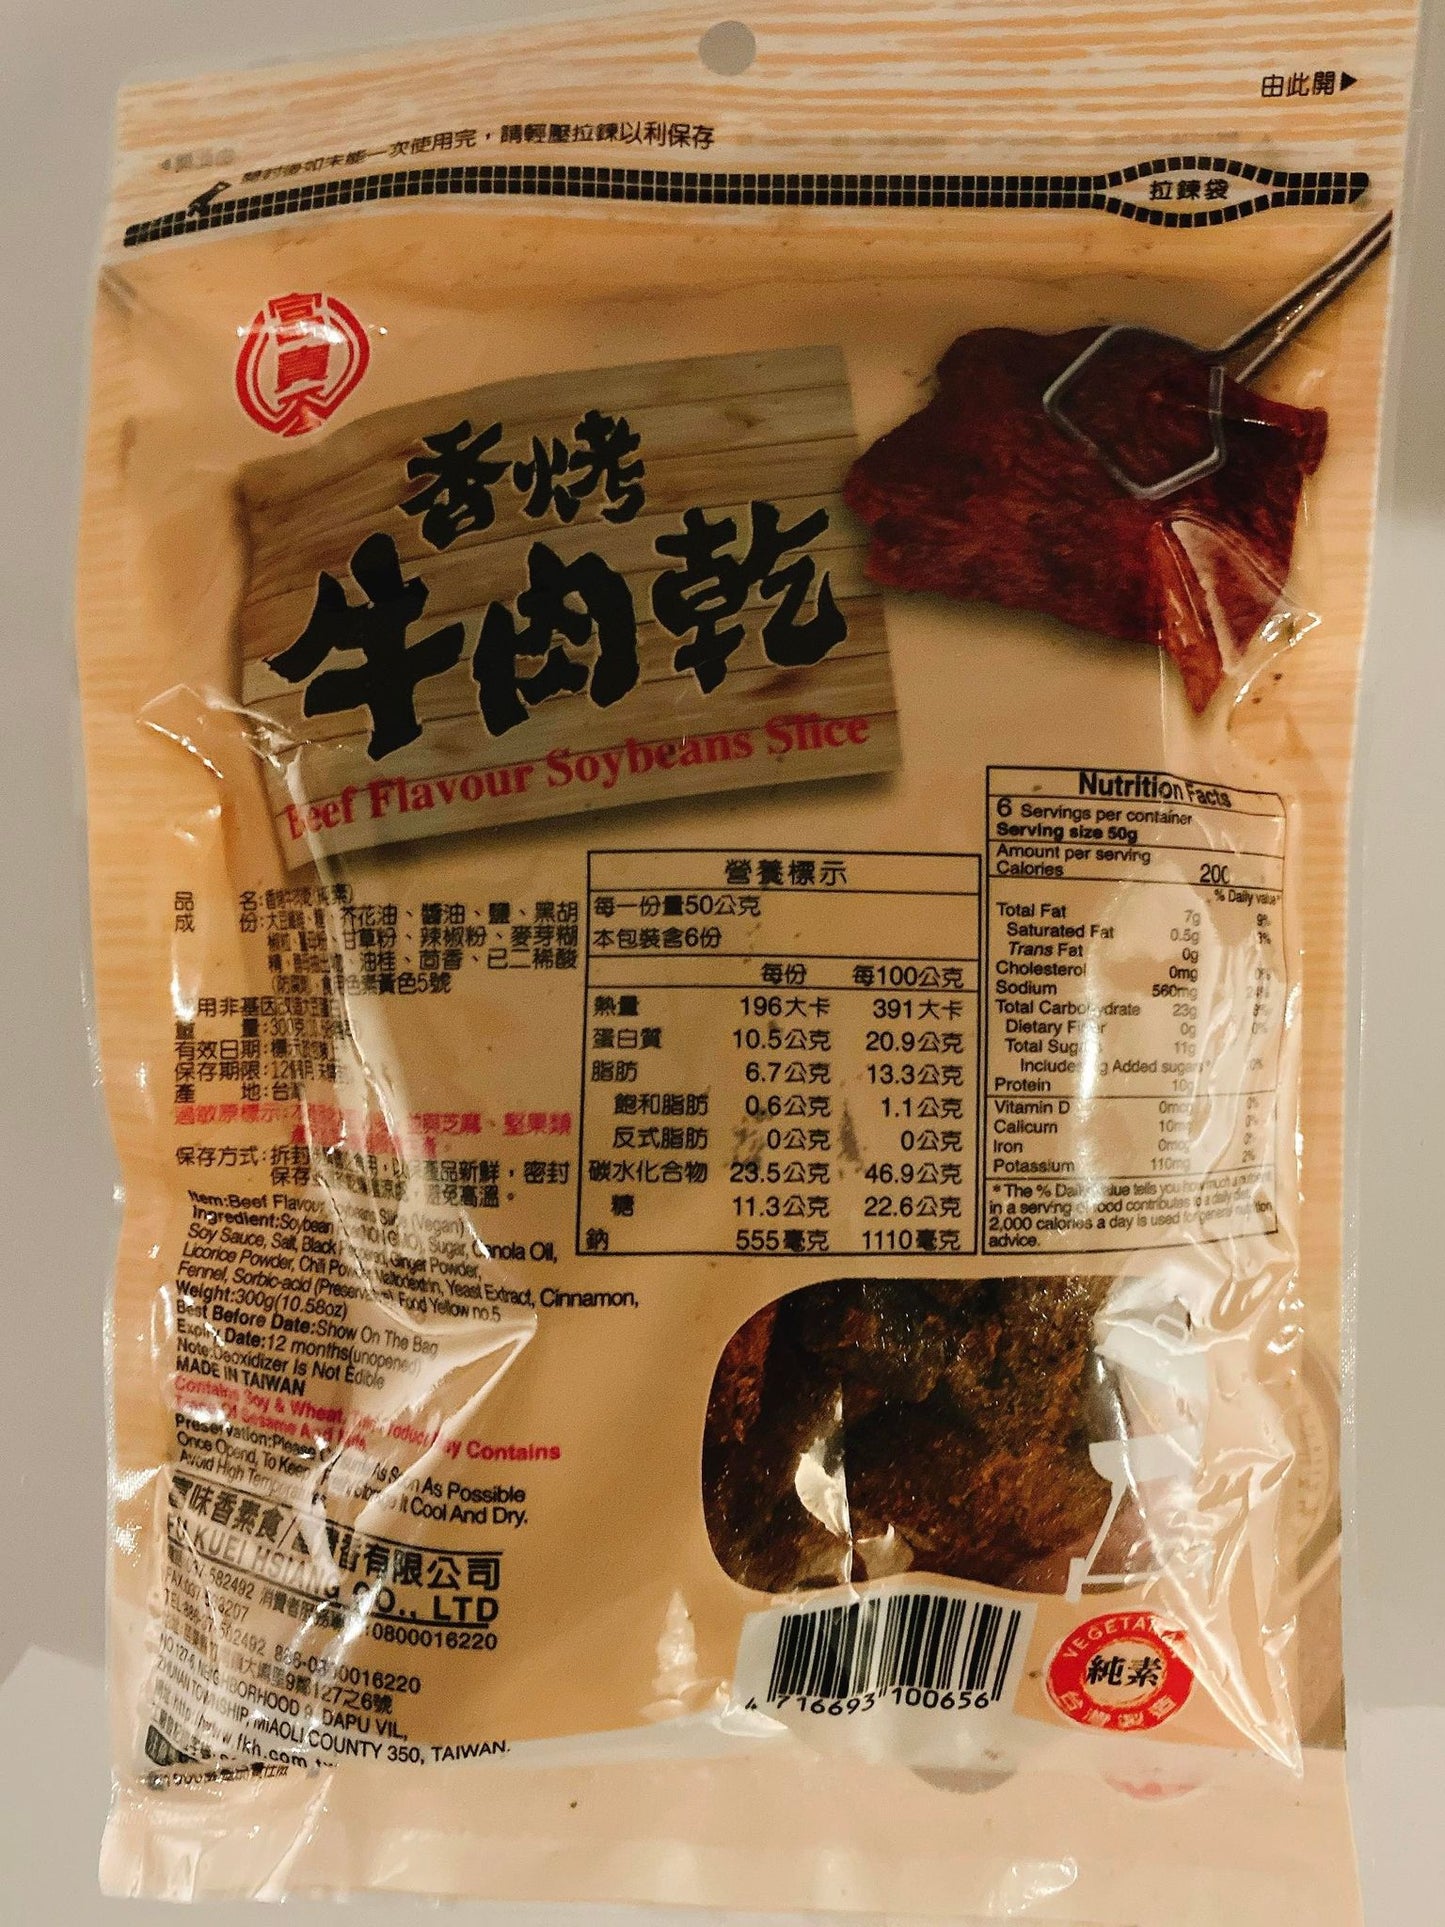 2 Pac Deal - Vegan Original Flavour "BEEF" Jerky 2件組 - [富貴香] 全素香烤"牛肉"乾